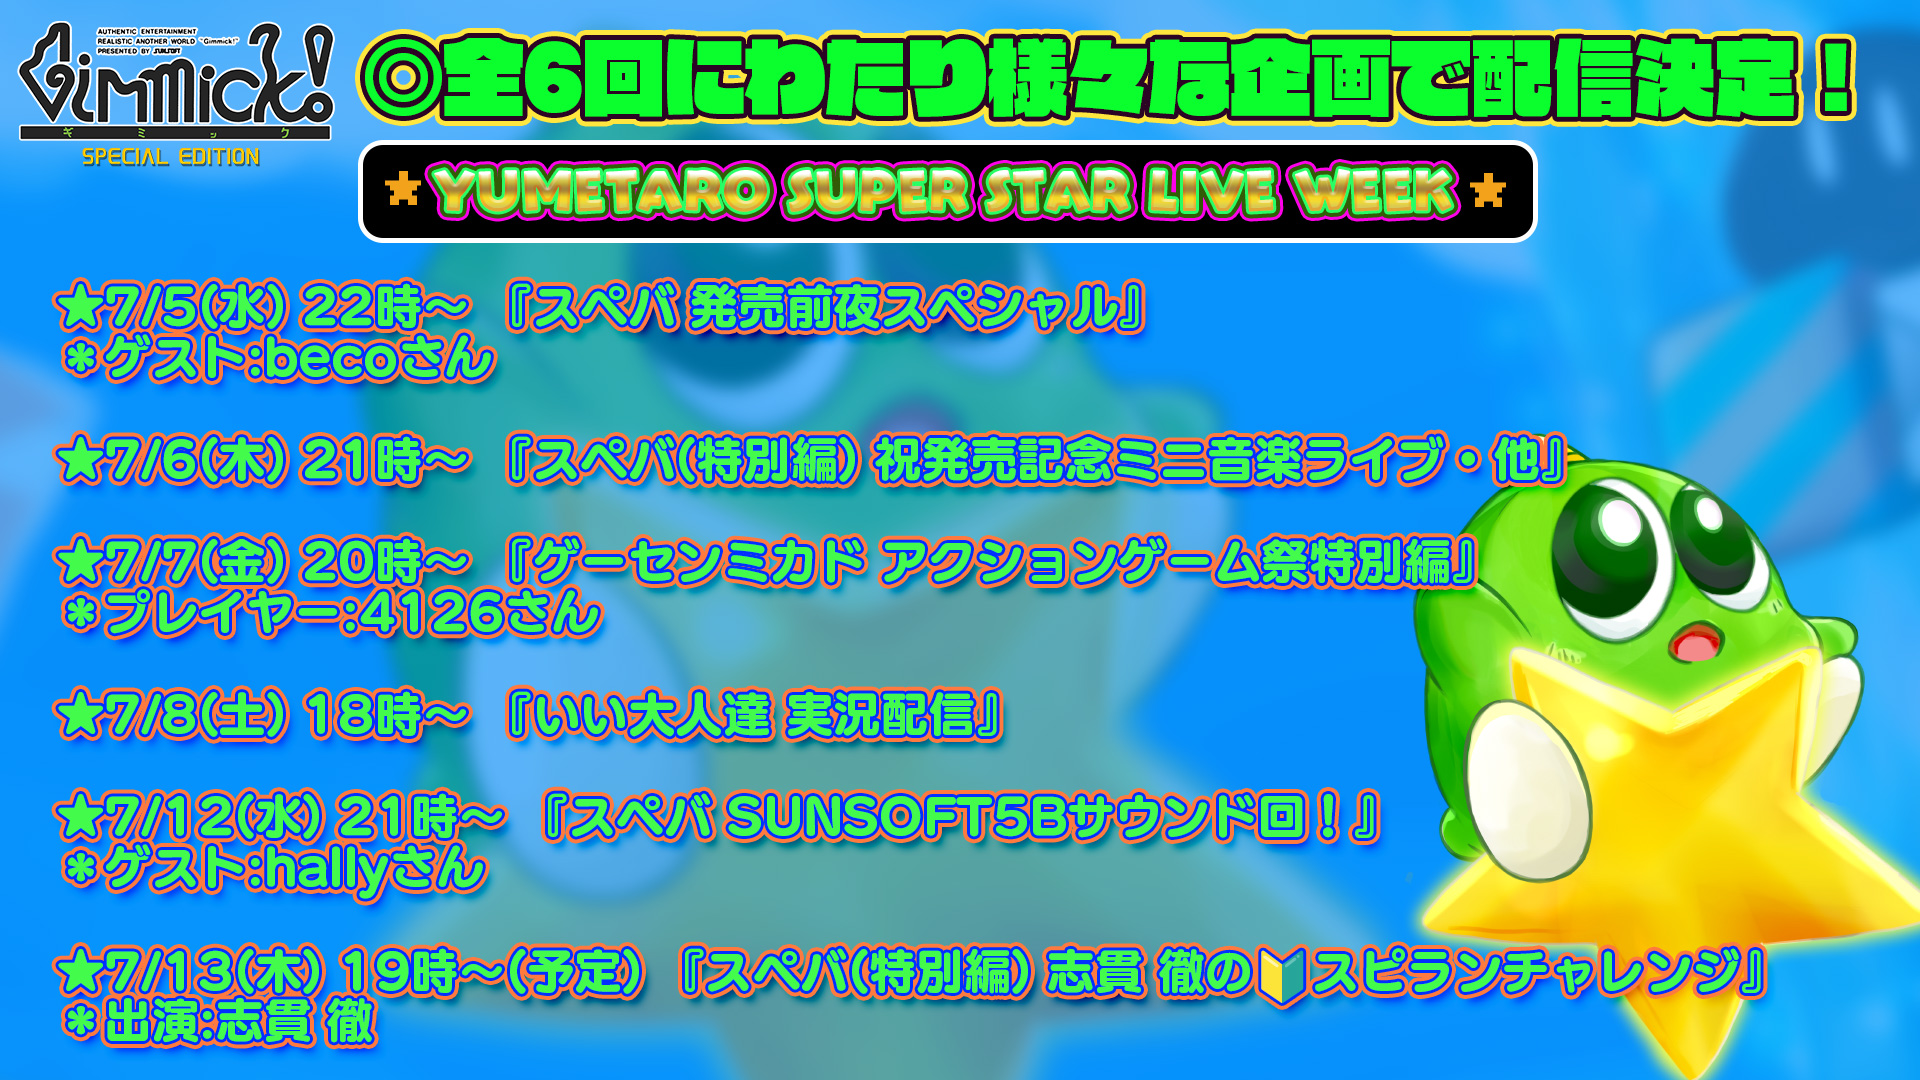 Detailed description image of 'YUMETARO SUPER STAR LIVE WEEK'